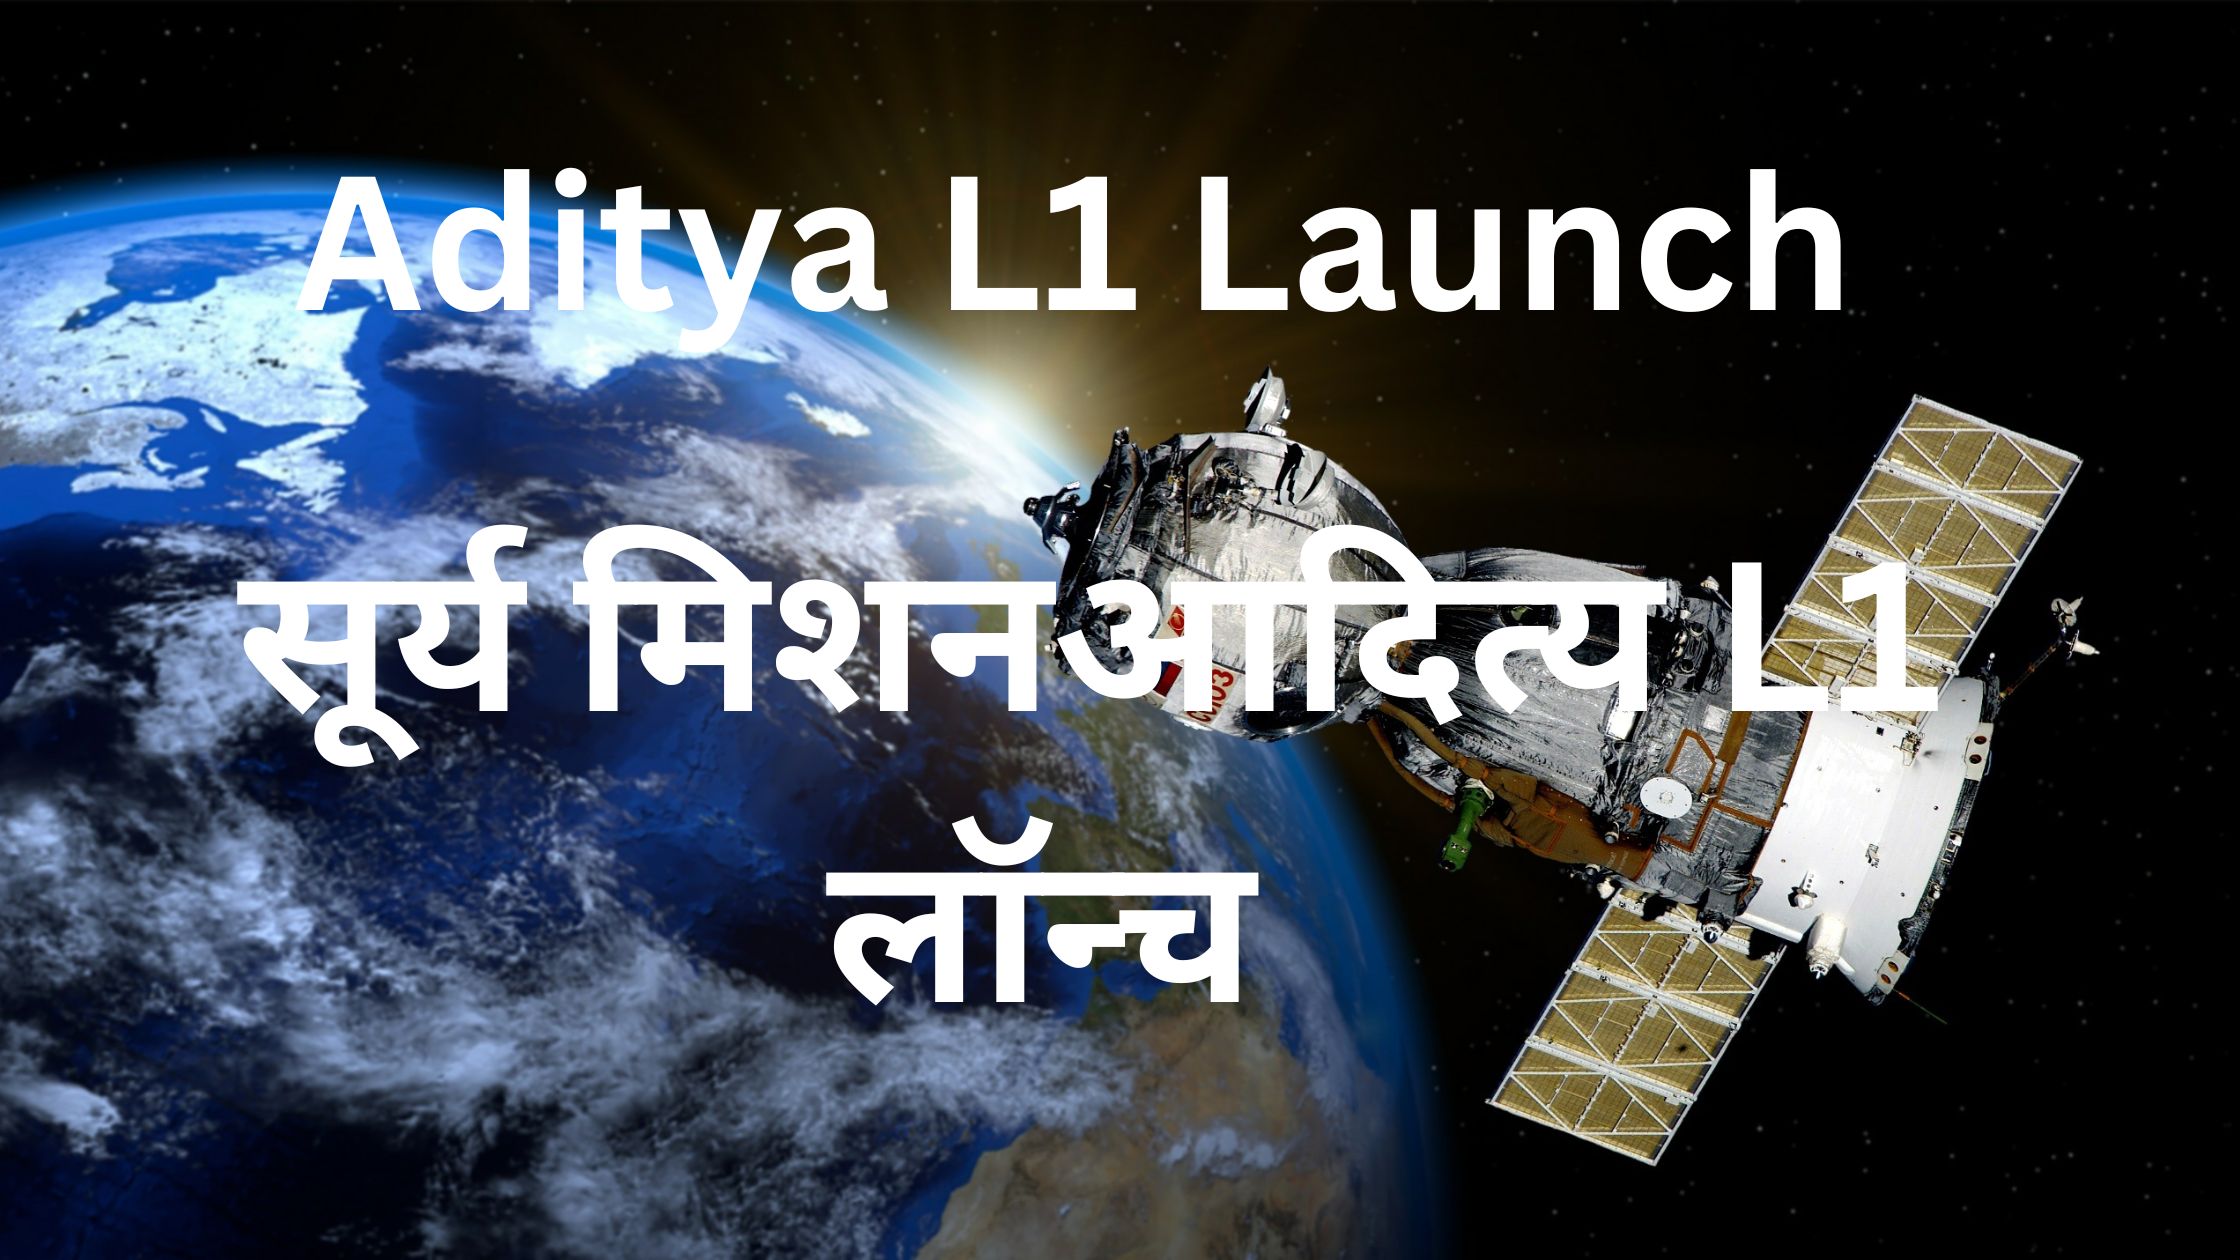 Aditya L1 Mission launch by ISRO India